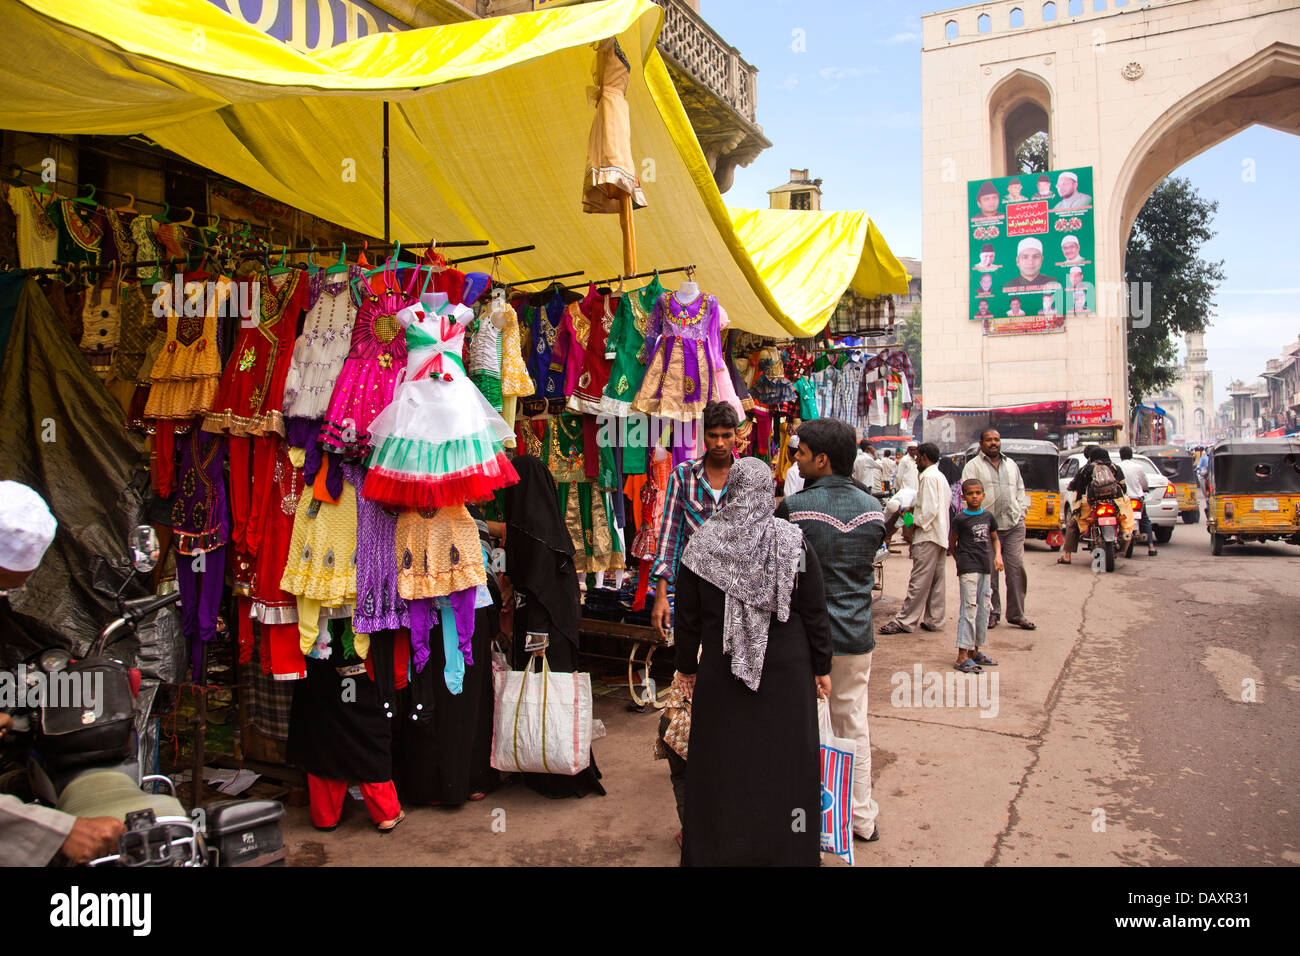 Les gens dans le marché, Bazar Charminar, Hyderabad, Andhra Pradesh, Inde Banque D'Images